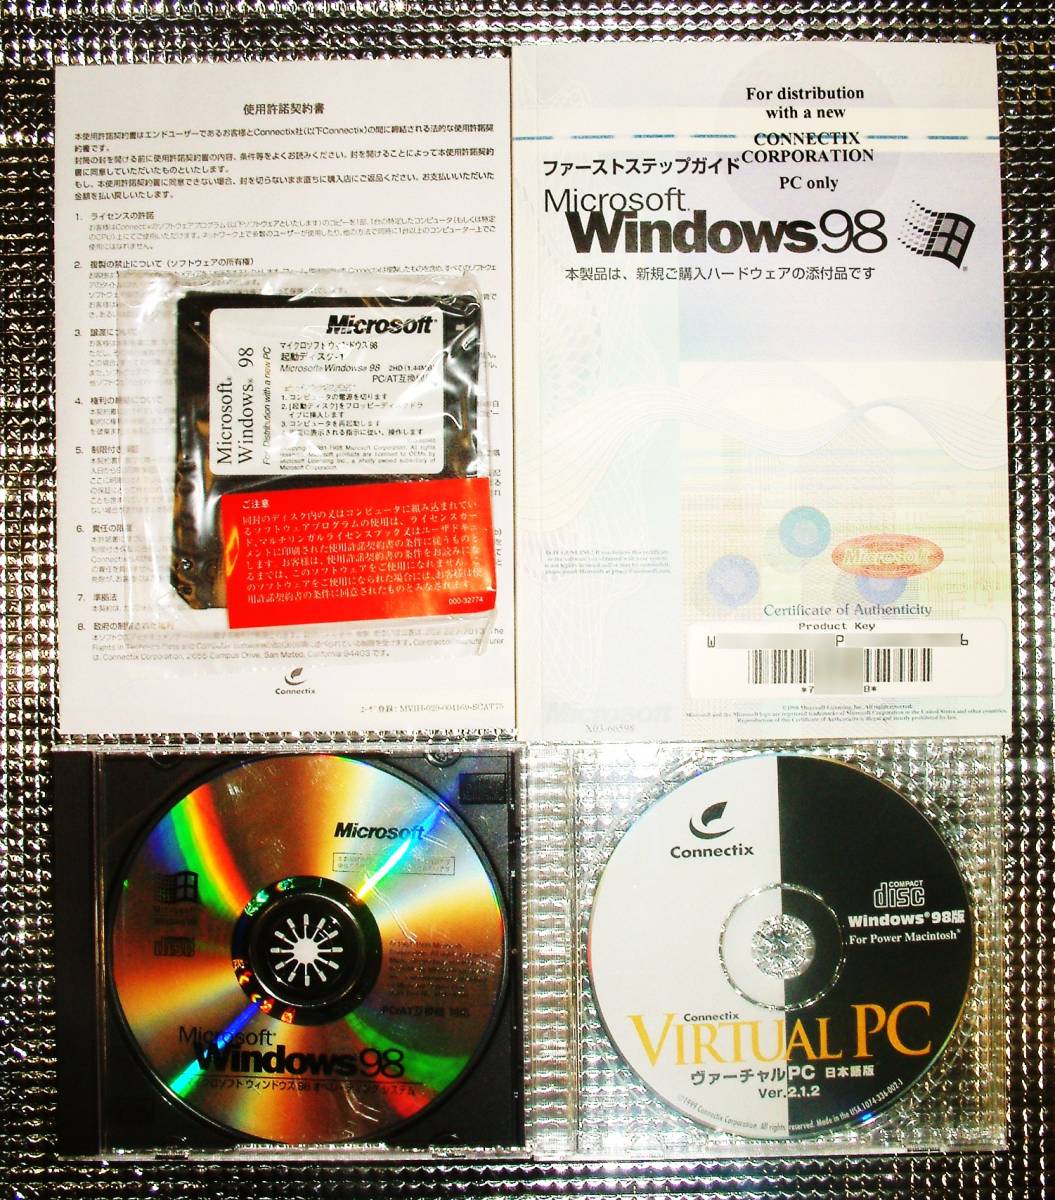 【3688】 Microsoft Virtual PC v2.1 for Power Macintosh with Windows98 ヴァーチャルPC 仮想化ソフト 仮想マシーン マッキントッシュ用_画像3